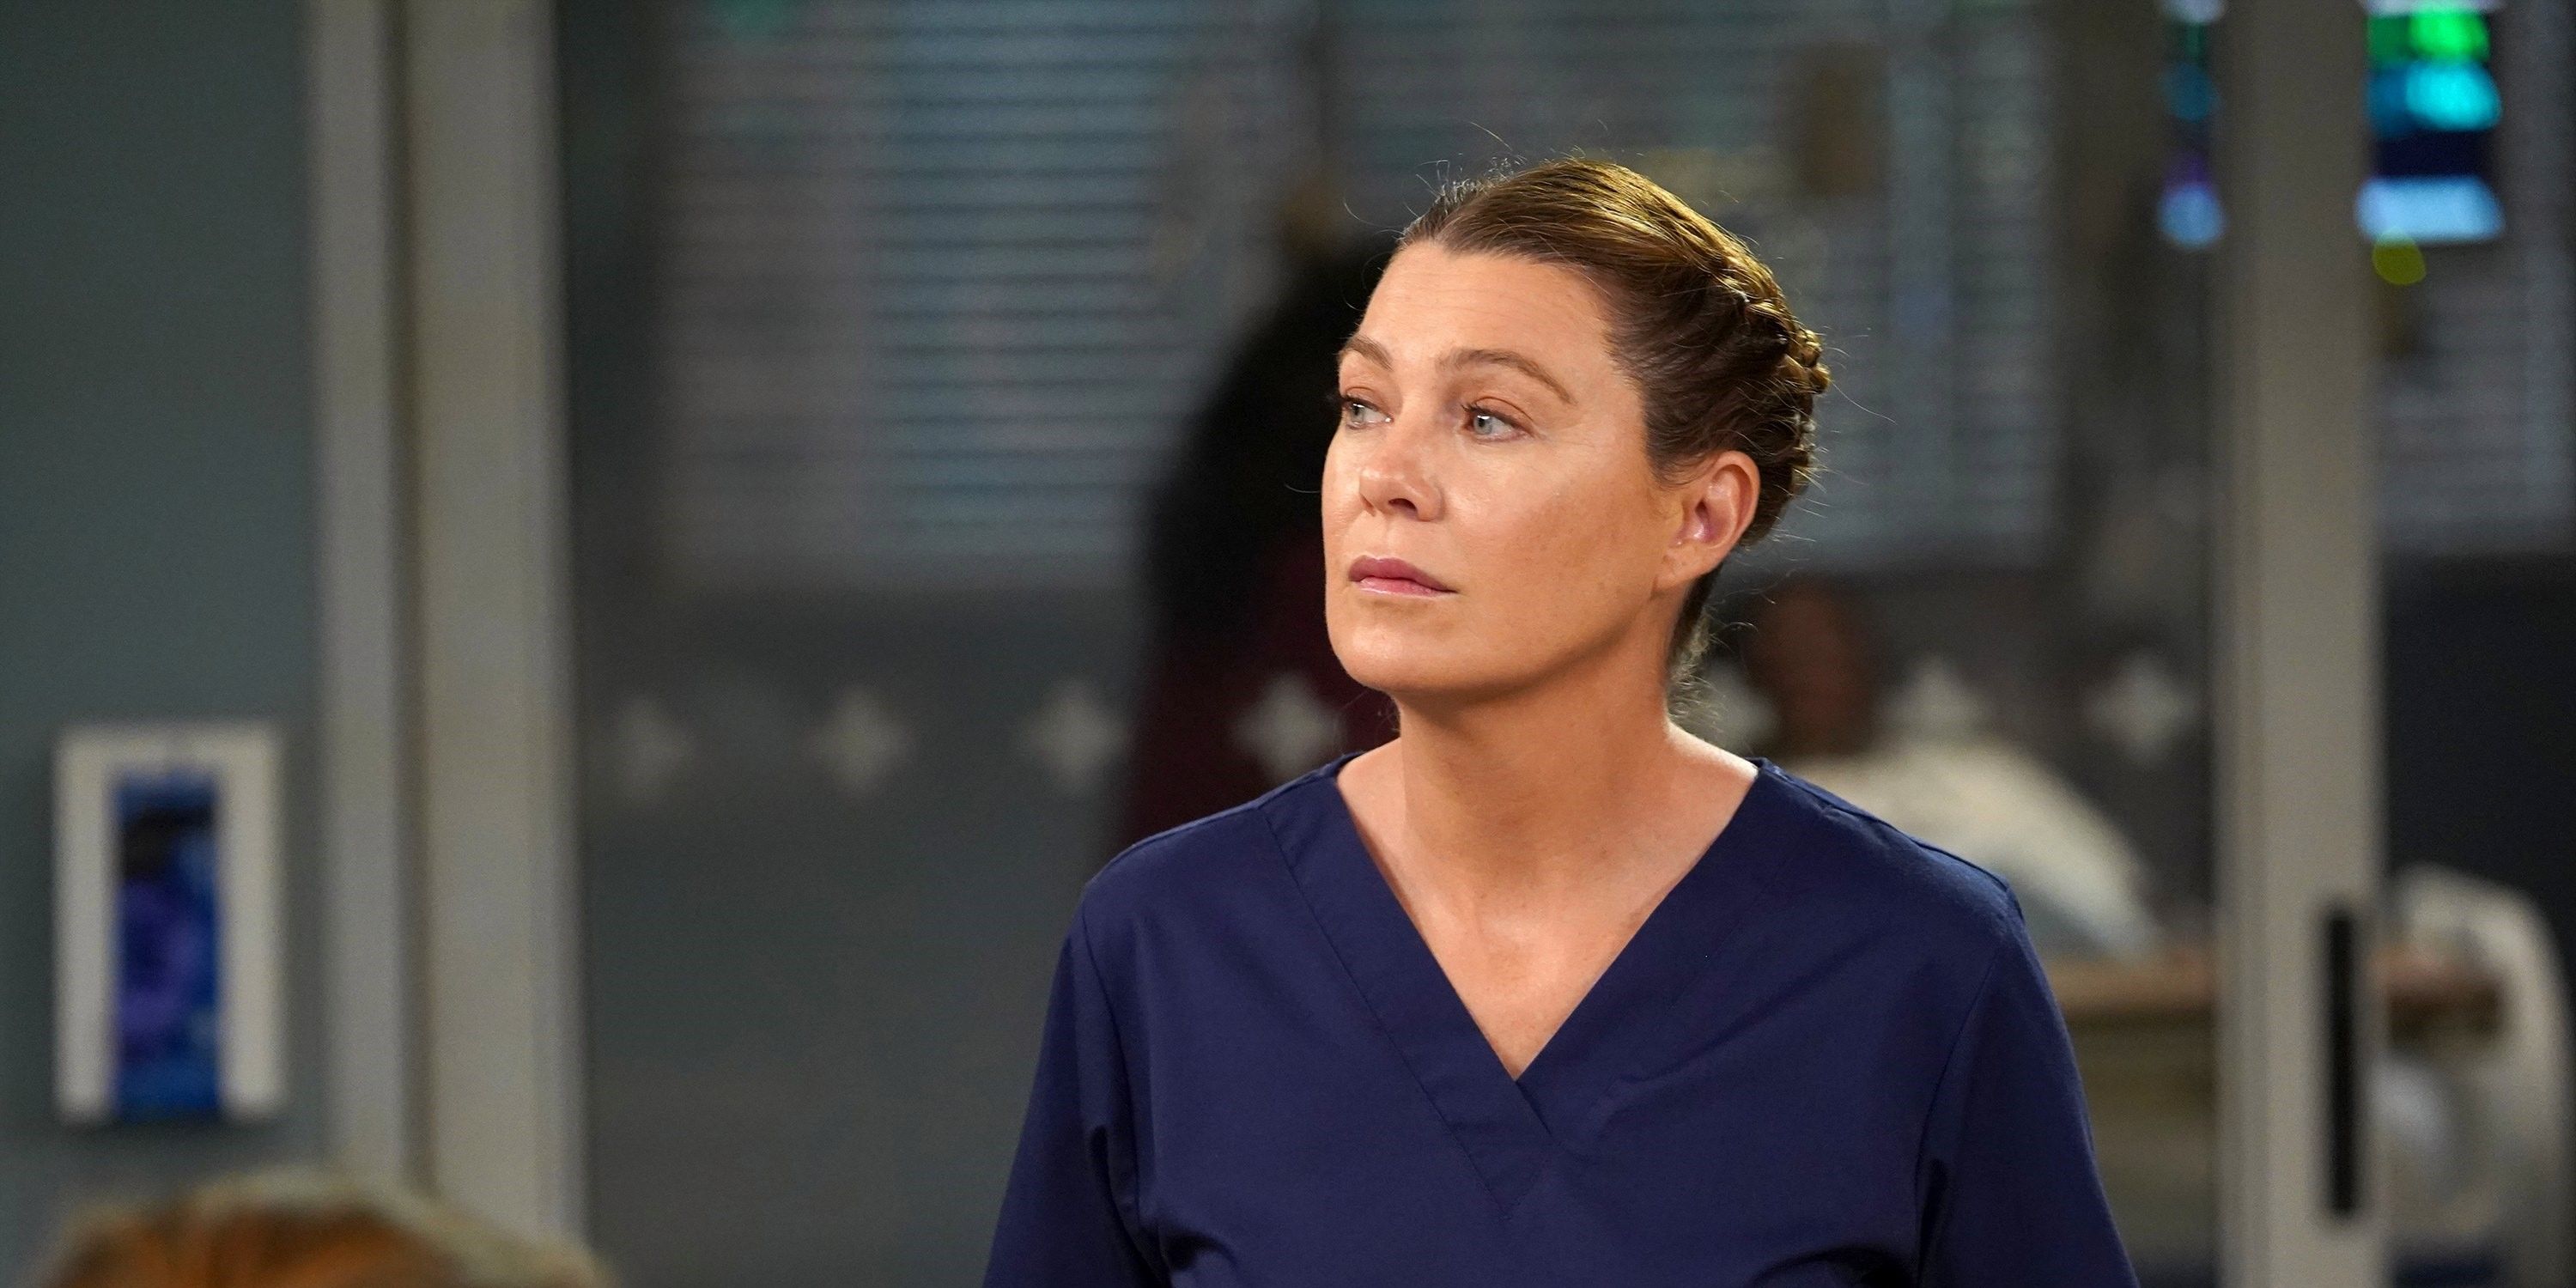 An image of Meredith Grey in her dark blue scrubs